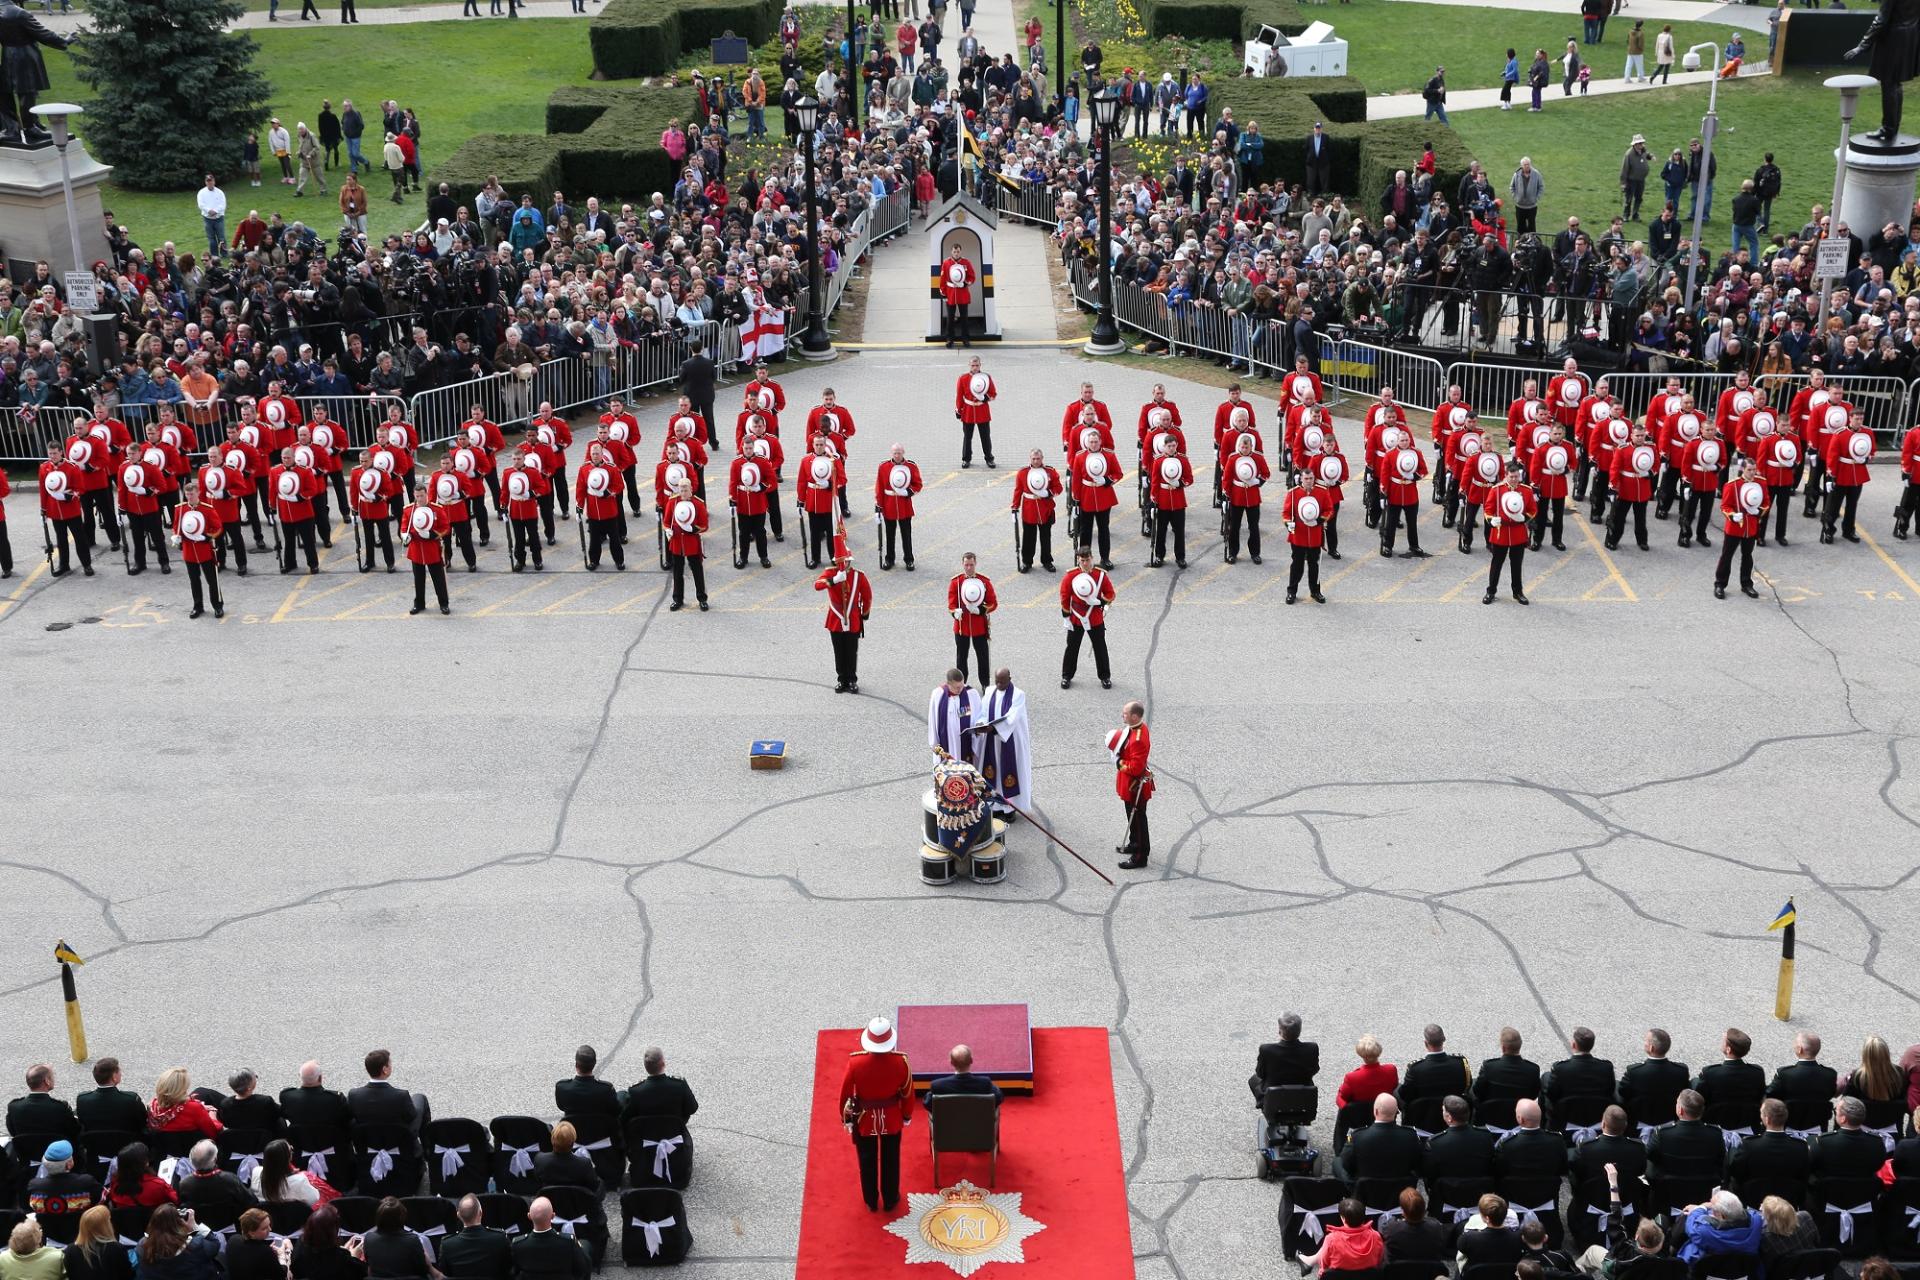 The Duke of Edinburgh observes the presentation of colours ceremony on the grounds of Ontario's Legislature, 2013 